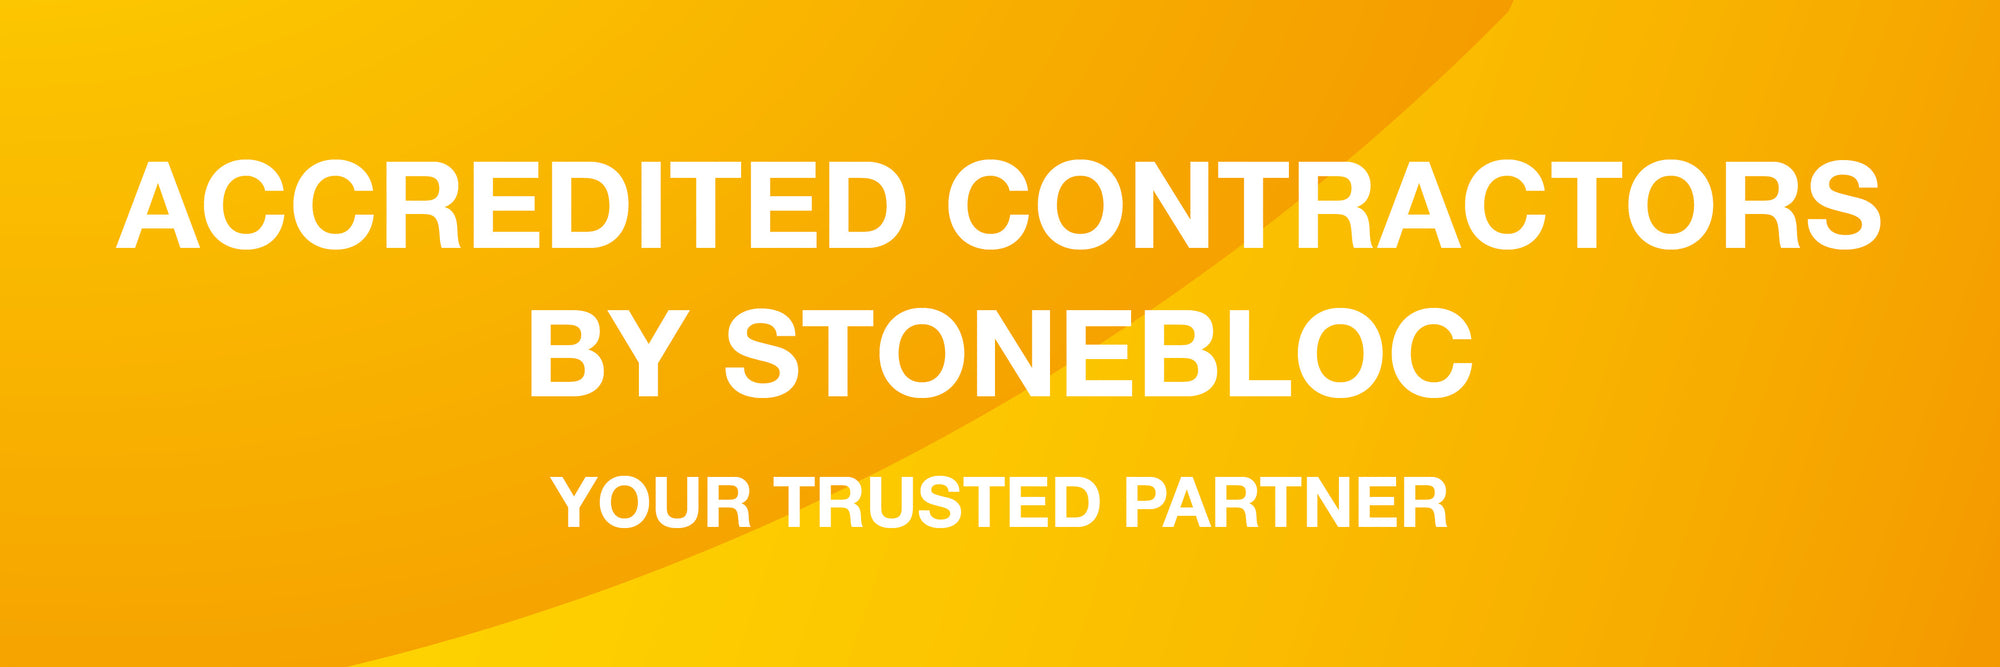 Introducing the Stonebloc Accredited Contractors Program